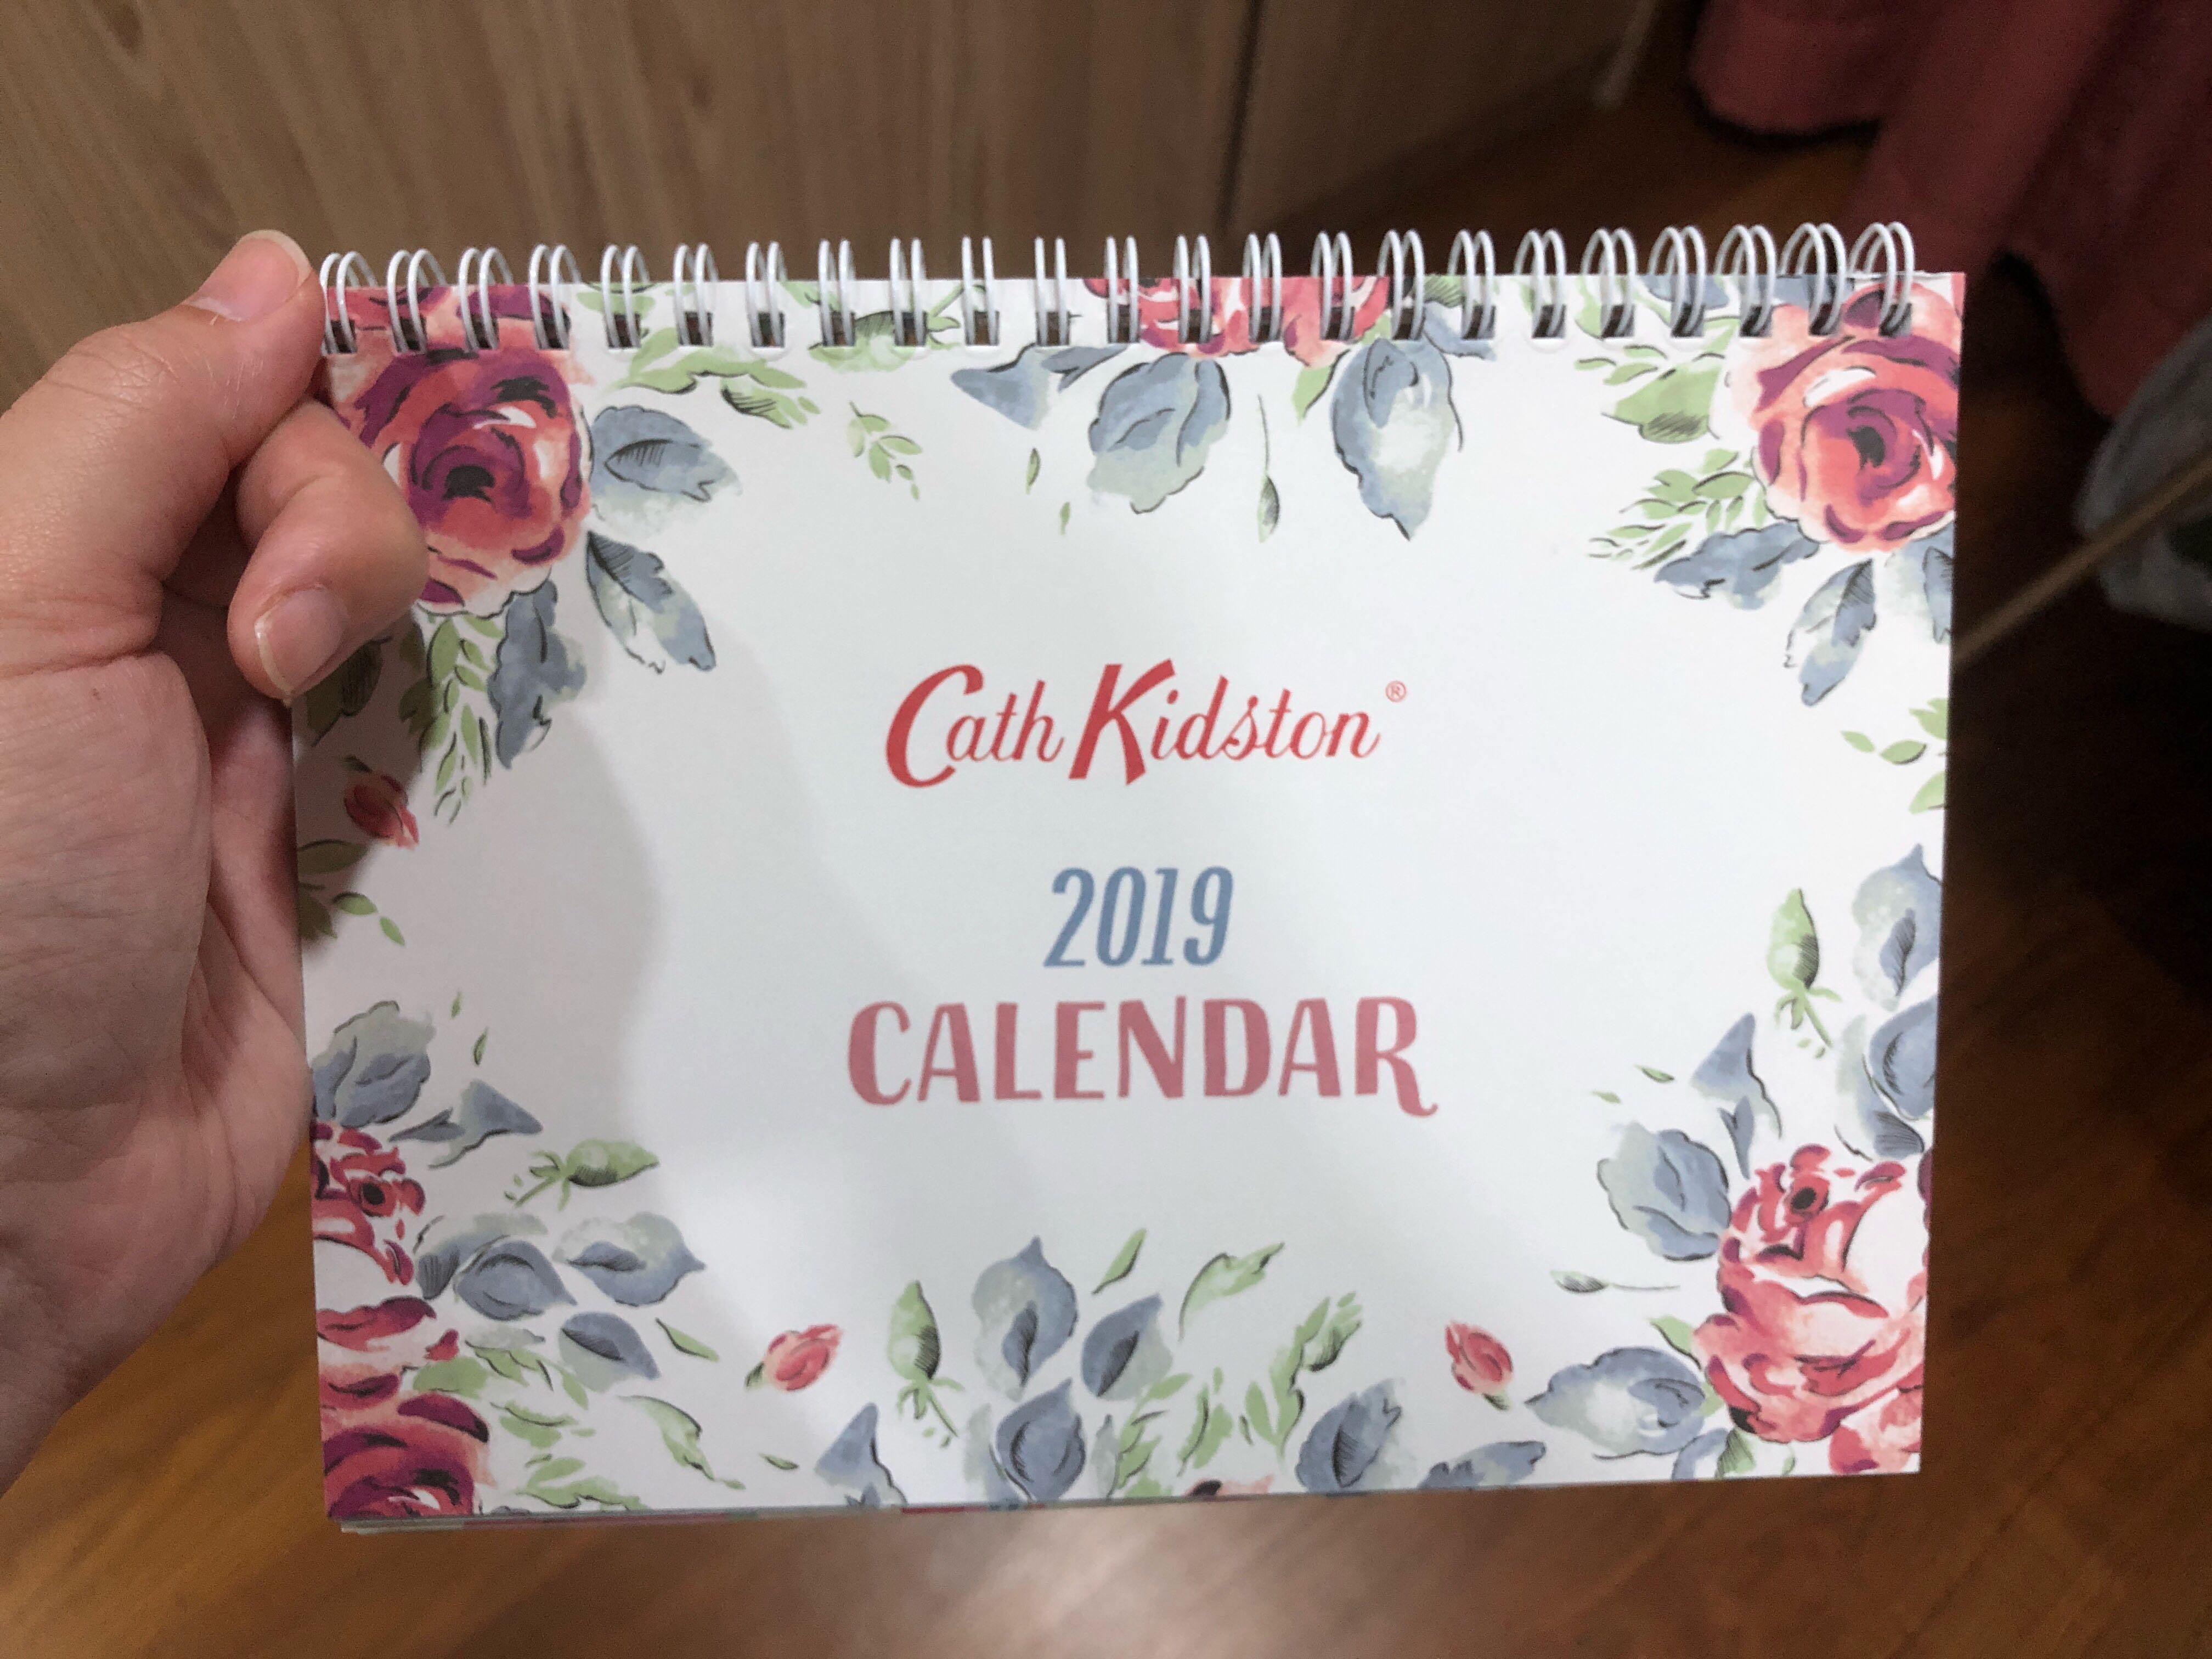 cath kidston calendar 2019